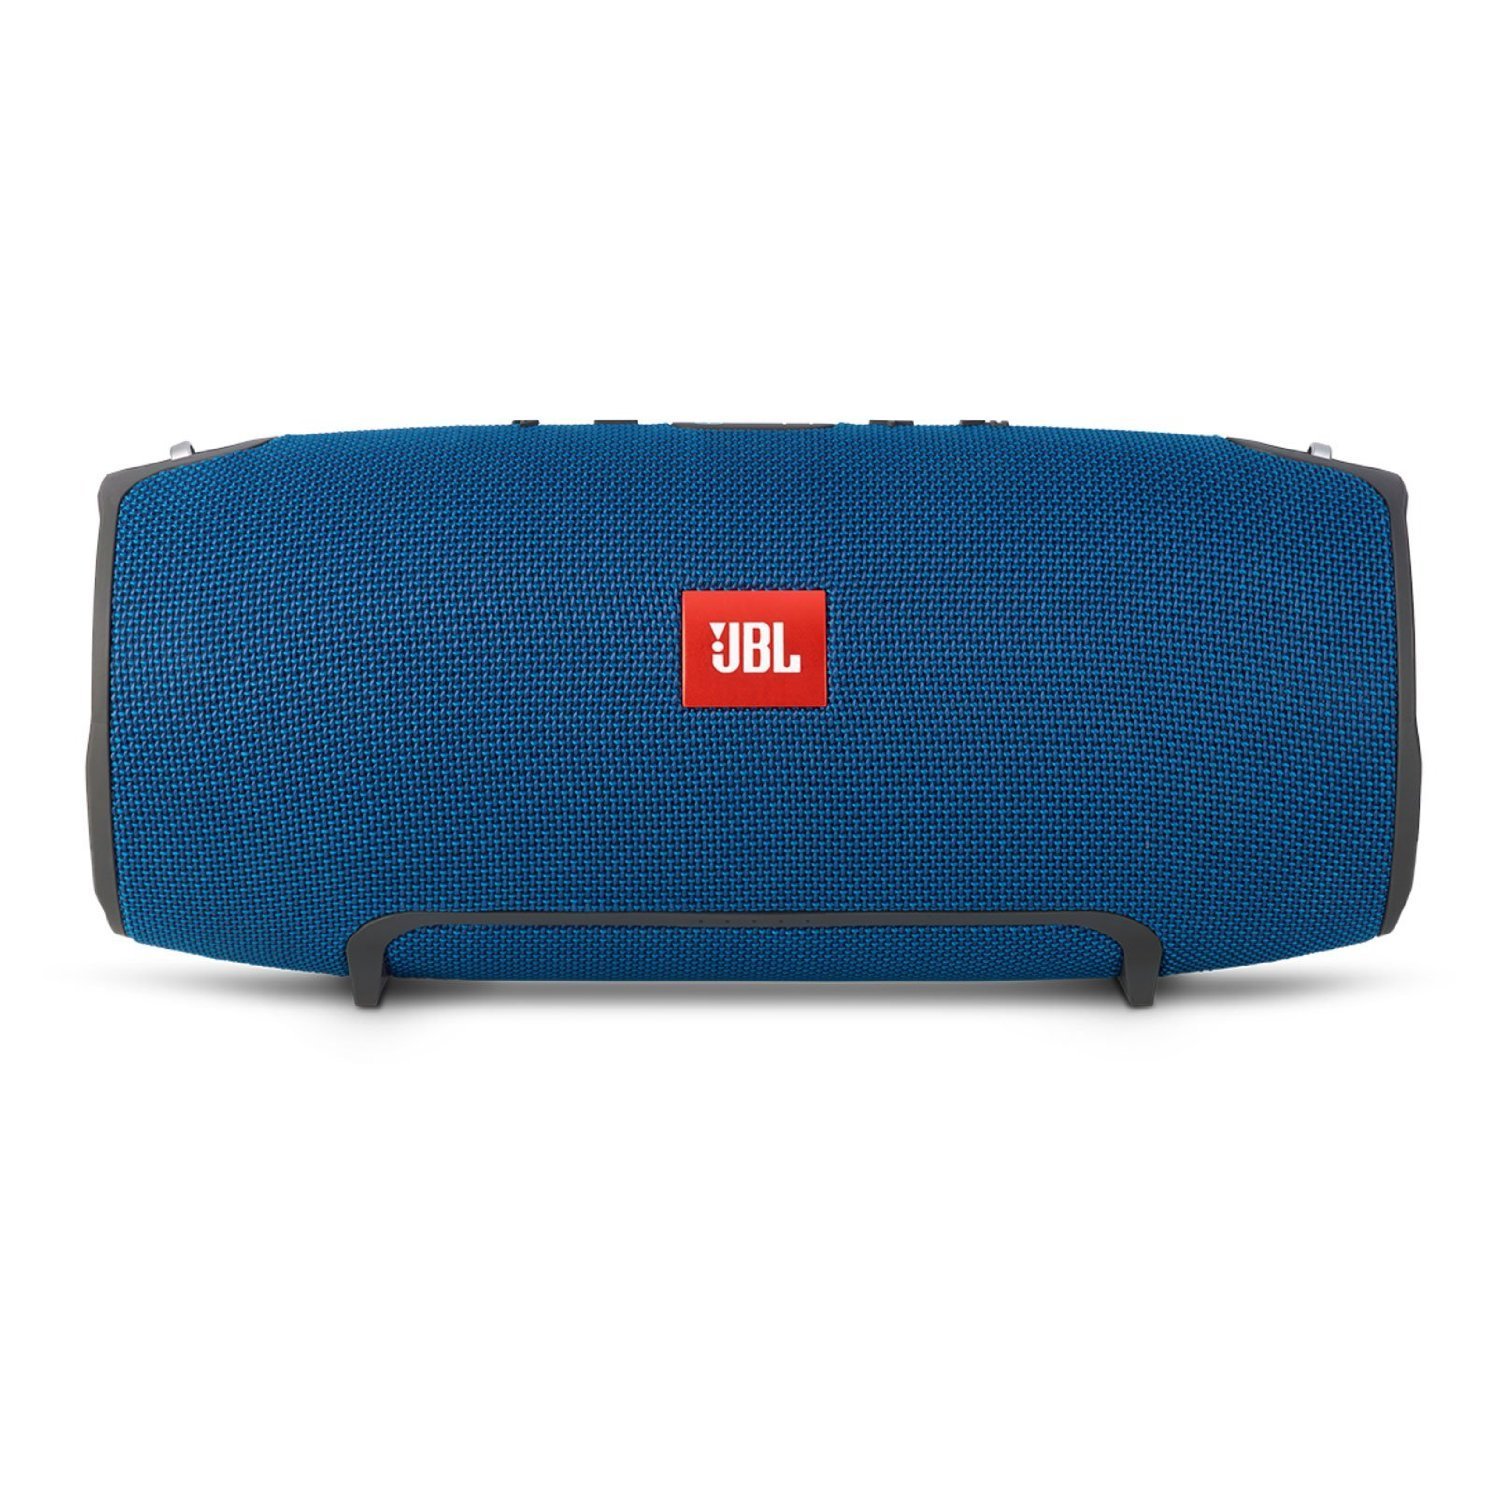 JBL Xtreme Portable Wireless Splashproof Bluetooth Speaker - Blue